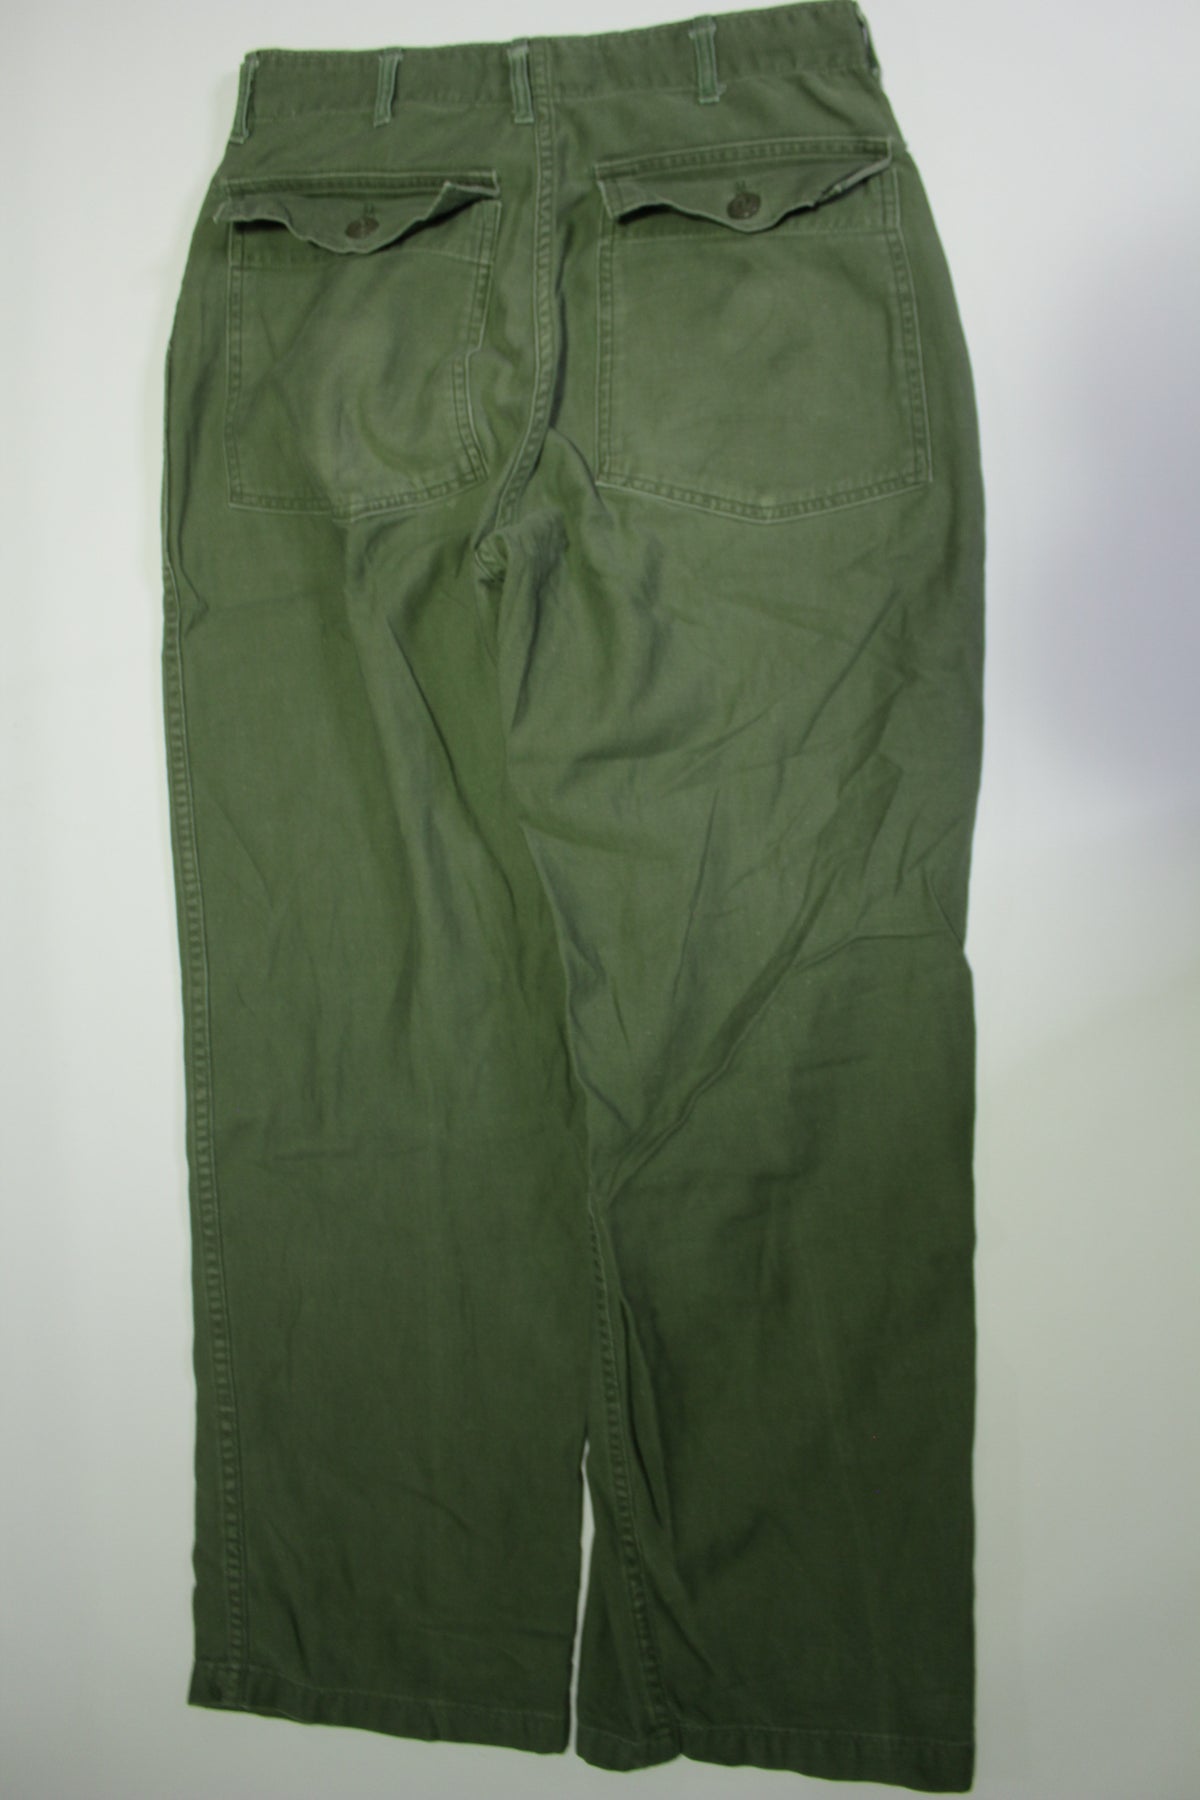 OG-107 Back Flap Pocket Vintage 70's Vietnam Era Cargo Military Army Field Trousrers Pants